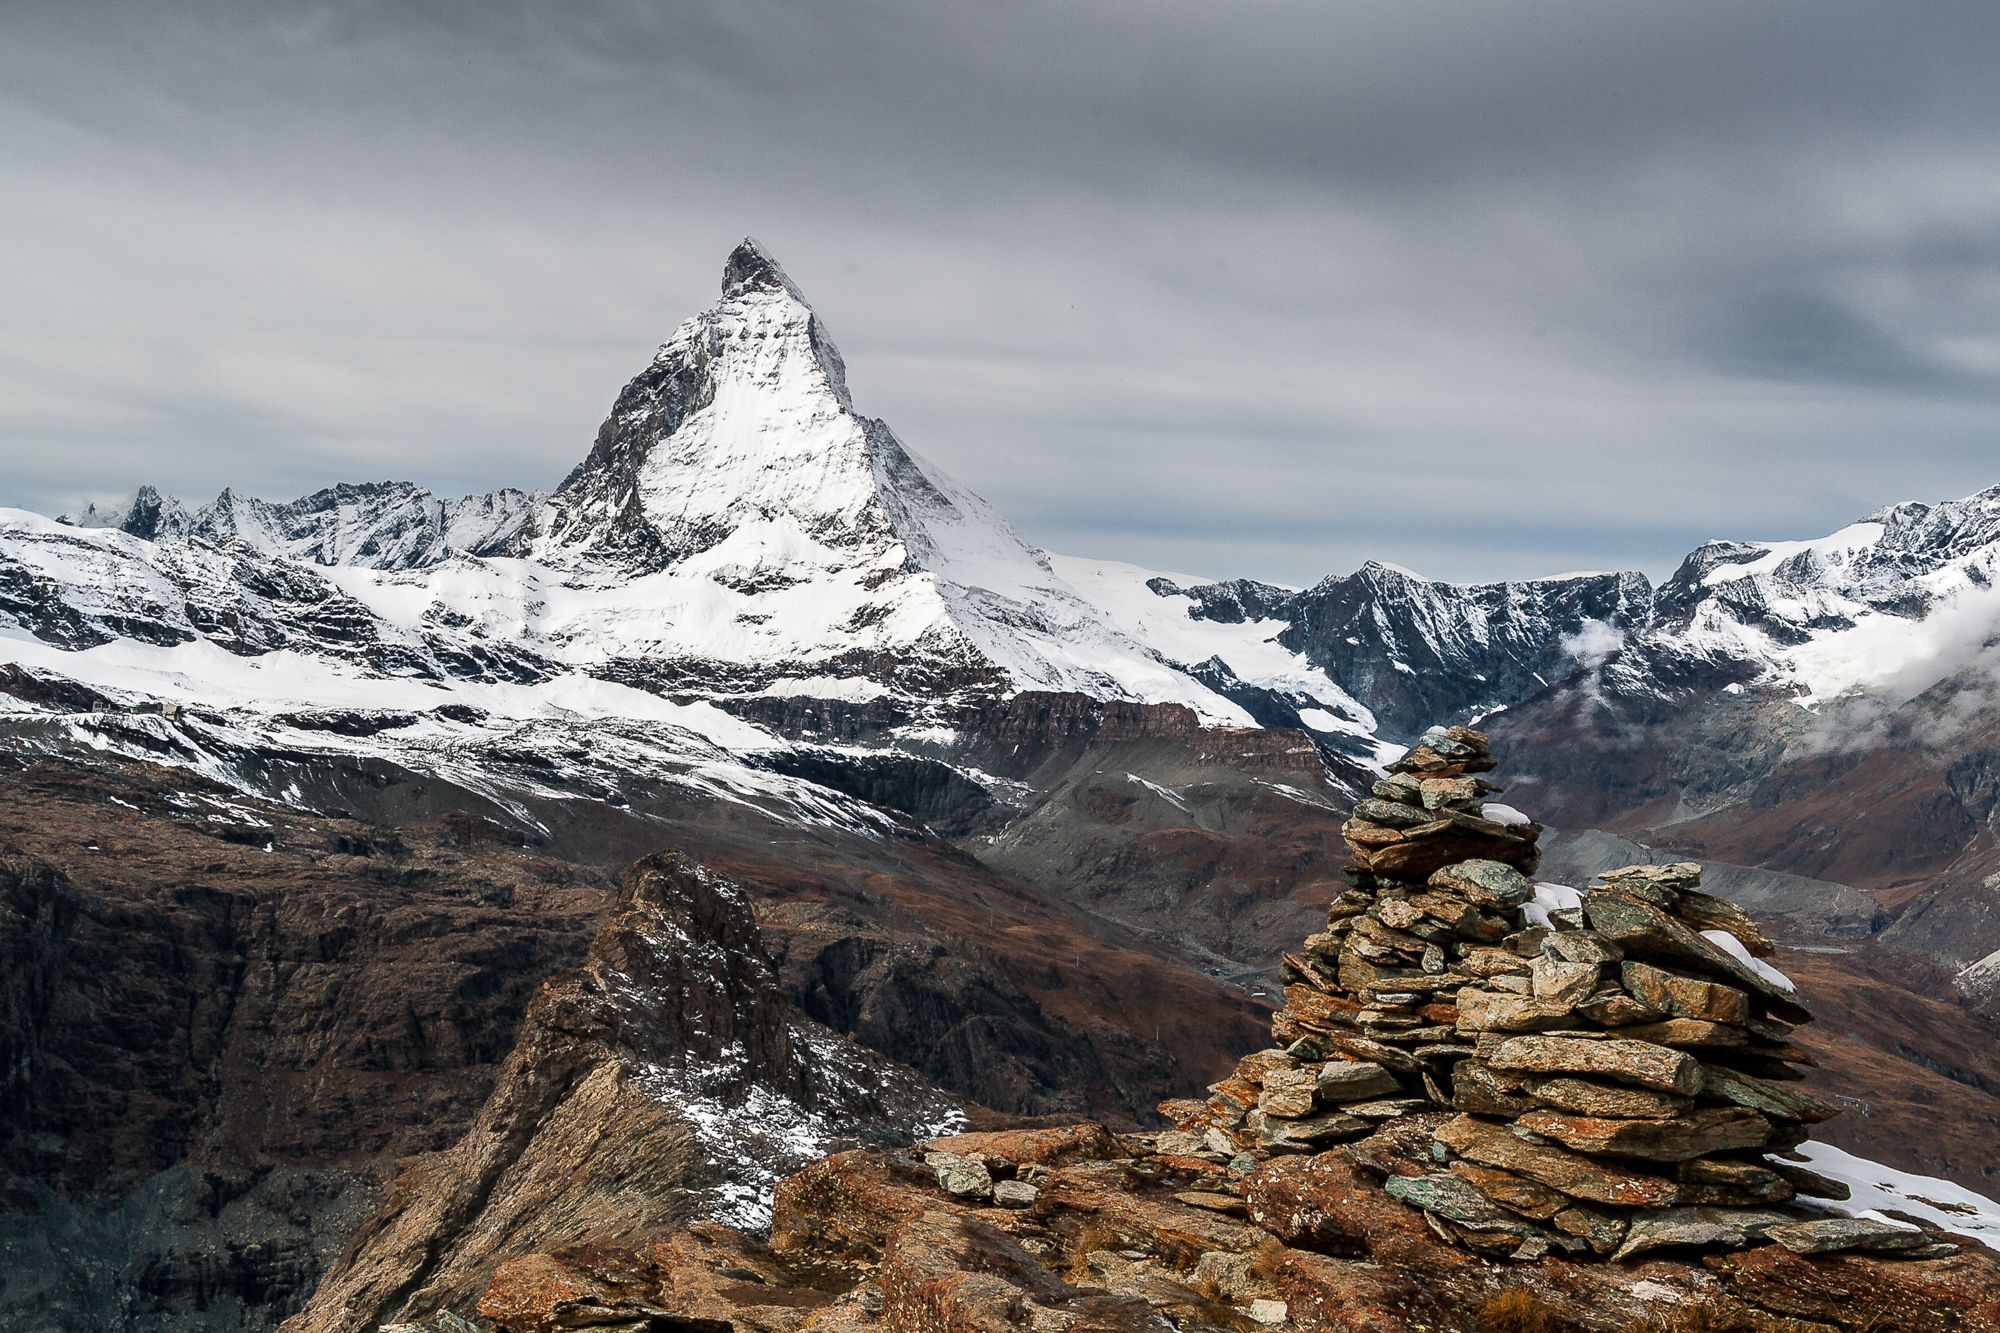 fotoNAT-UB 2014 - SELECCIONADA DE NATURA: Matterhorn (David Alesina)